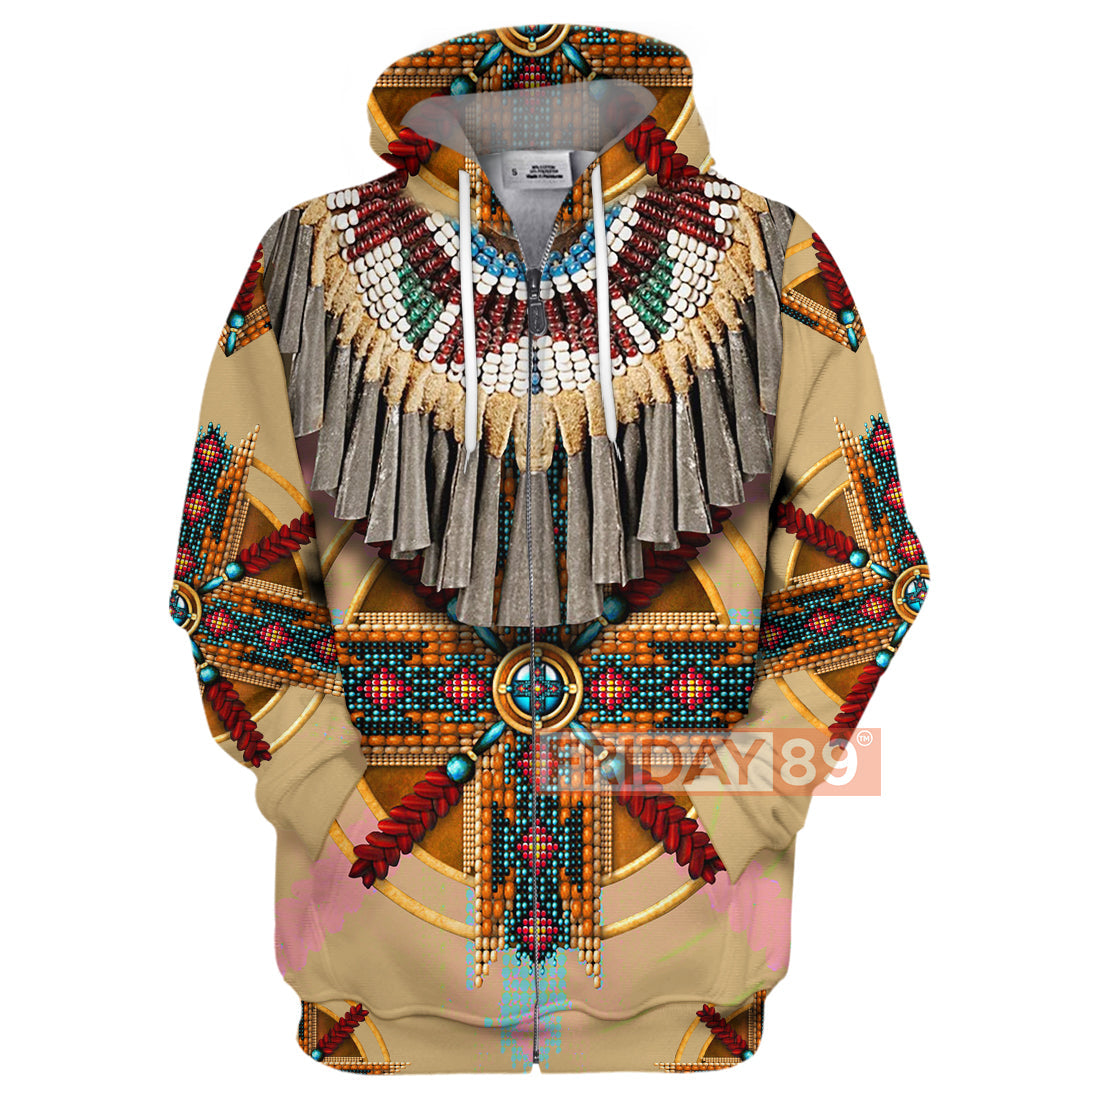 Unifinz Native America T-shirt Native American Culture Pattern T-shirt Awesome Native America Shirt Sweater Tank 2026